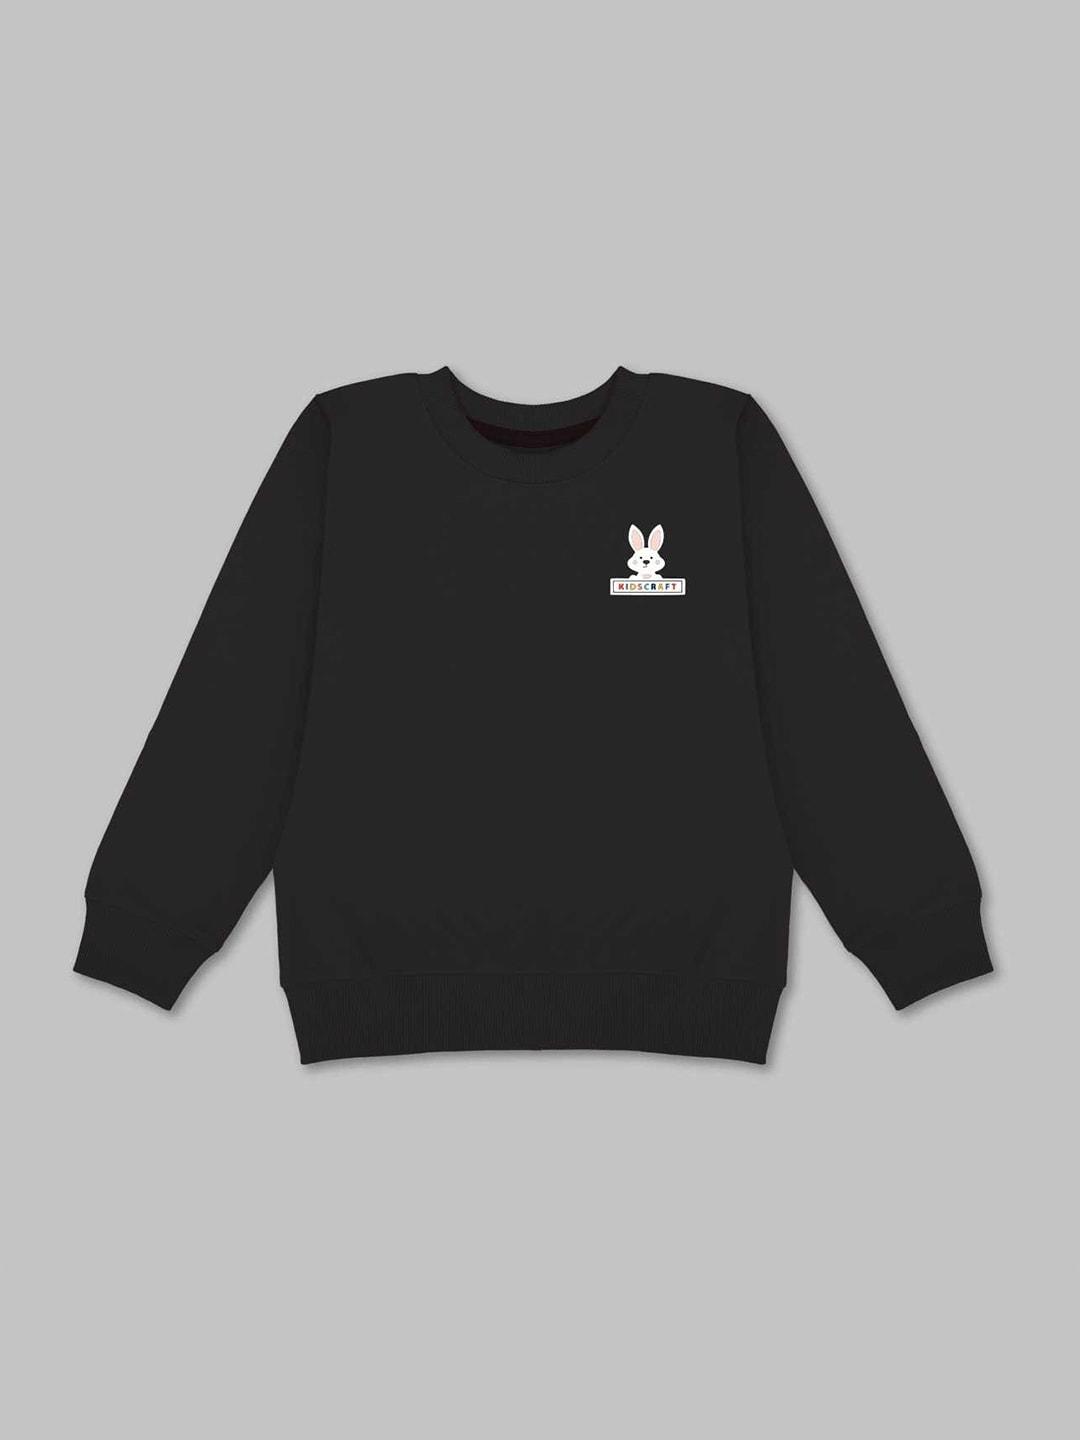 kidscraft-boys-black-sweatshirt